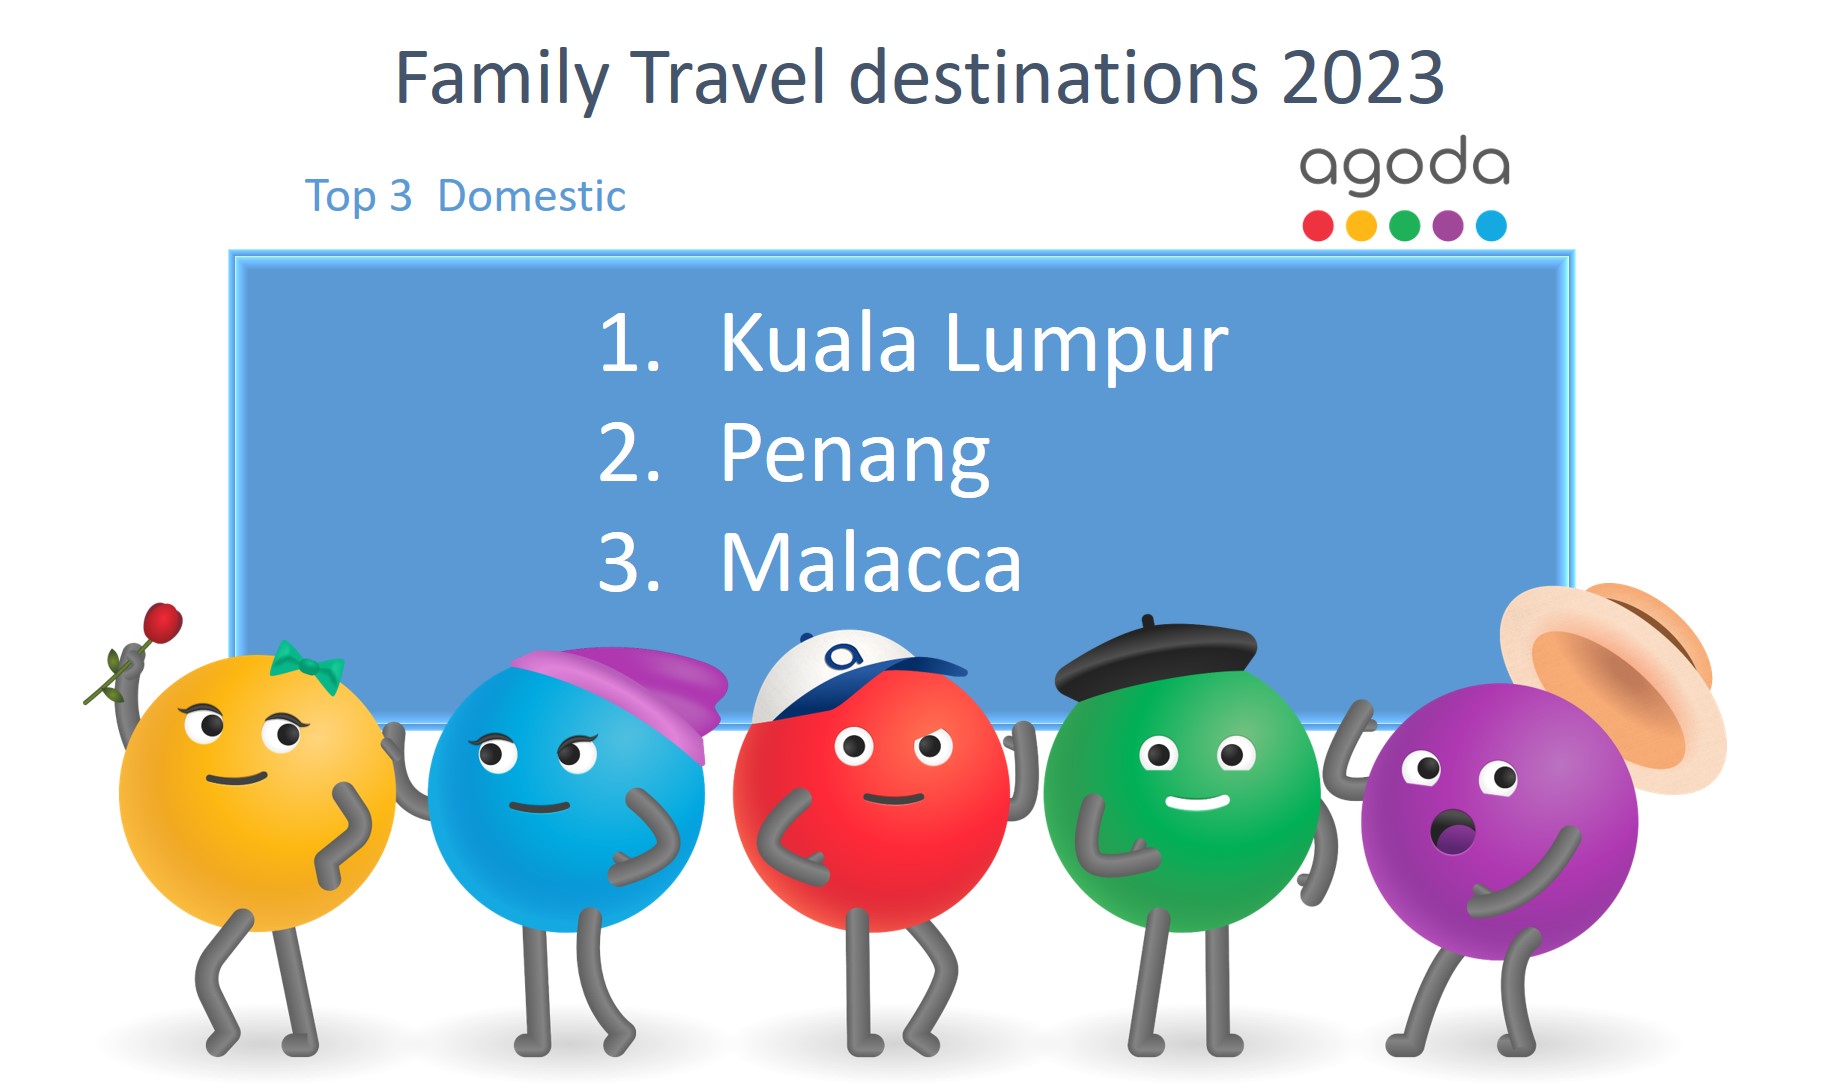 Malaysian families